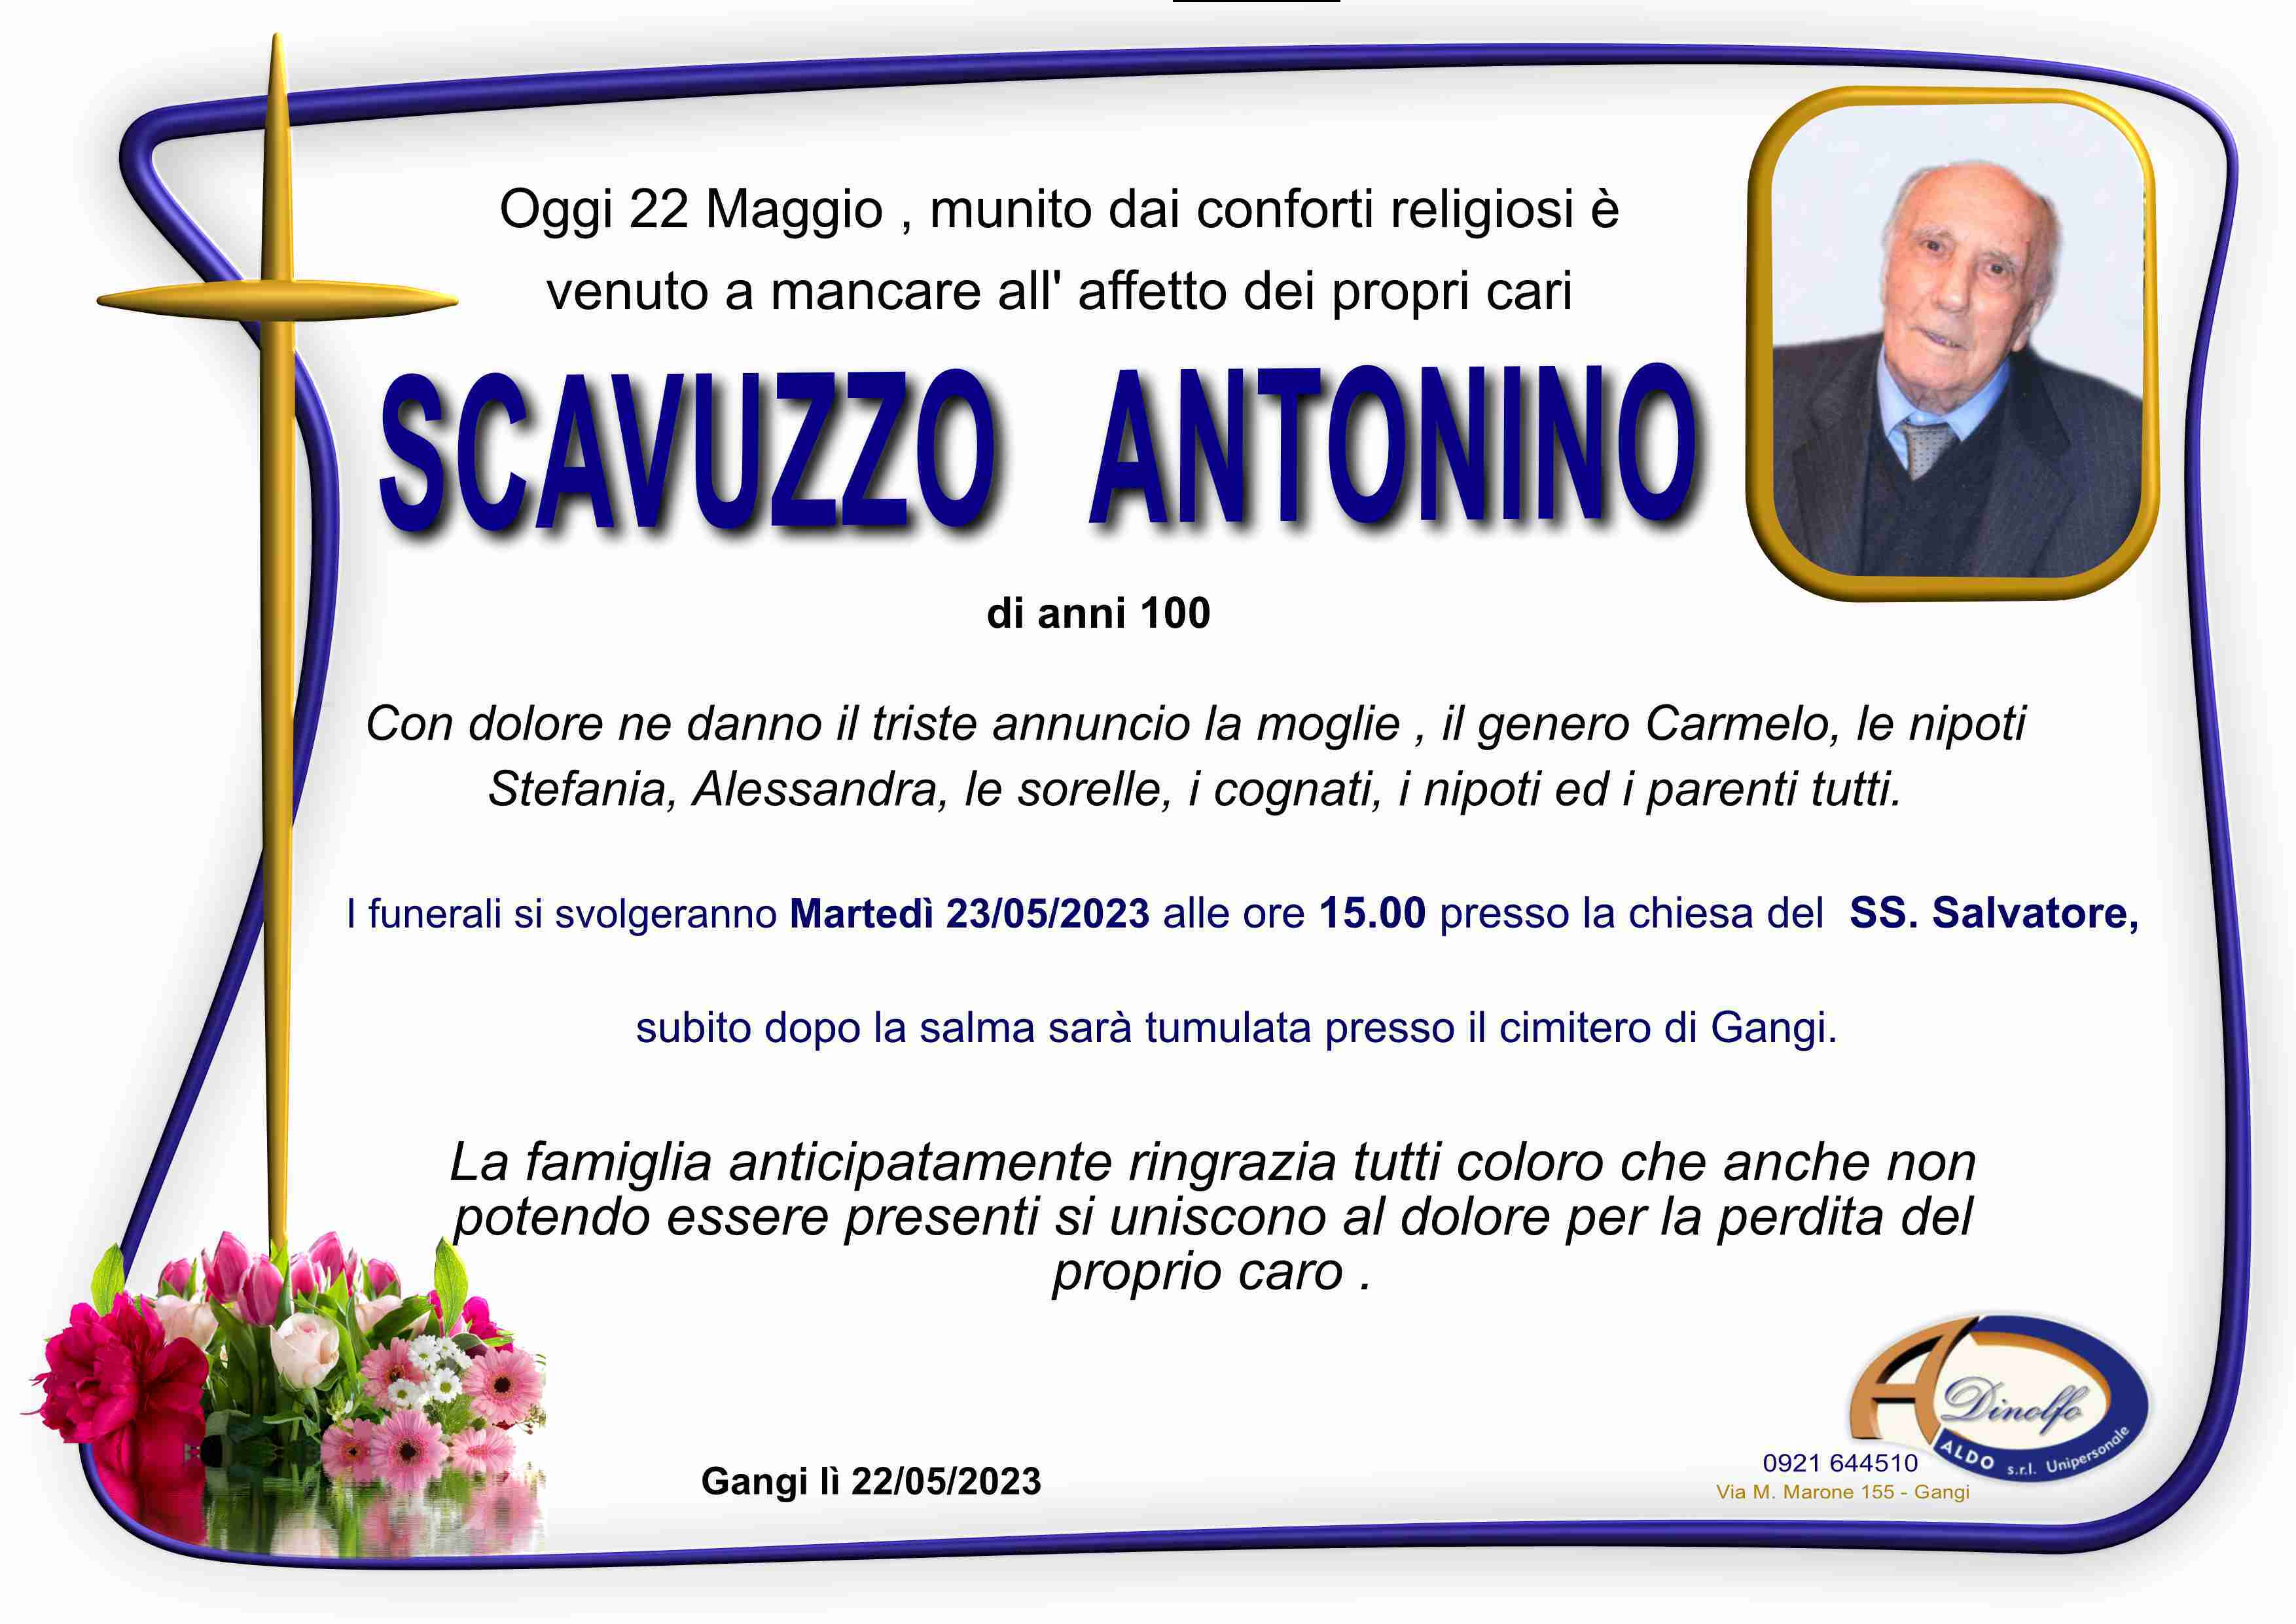 Antonino Scavuzzo